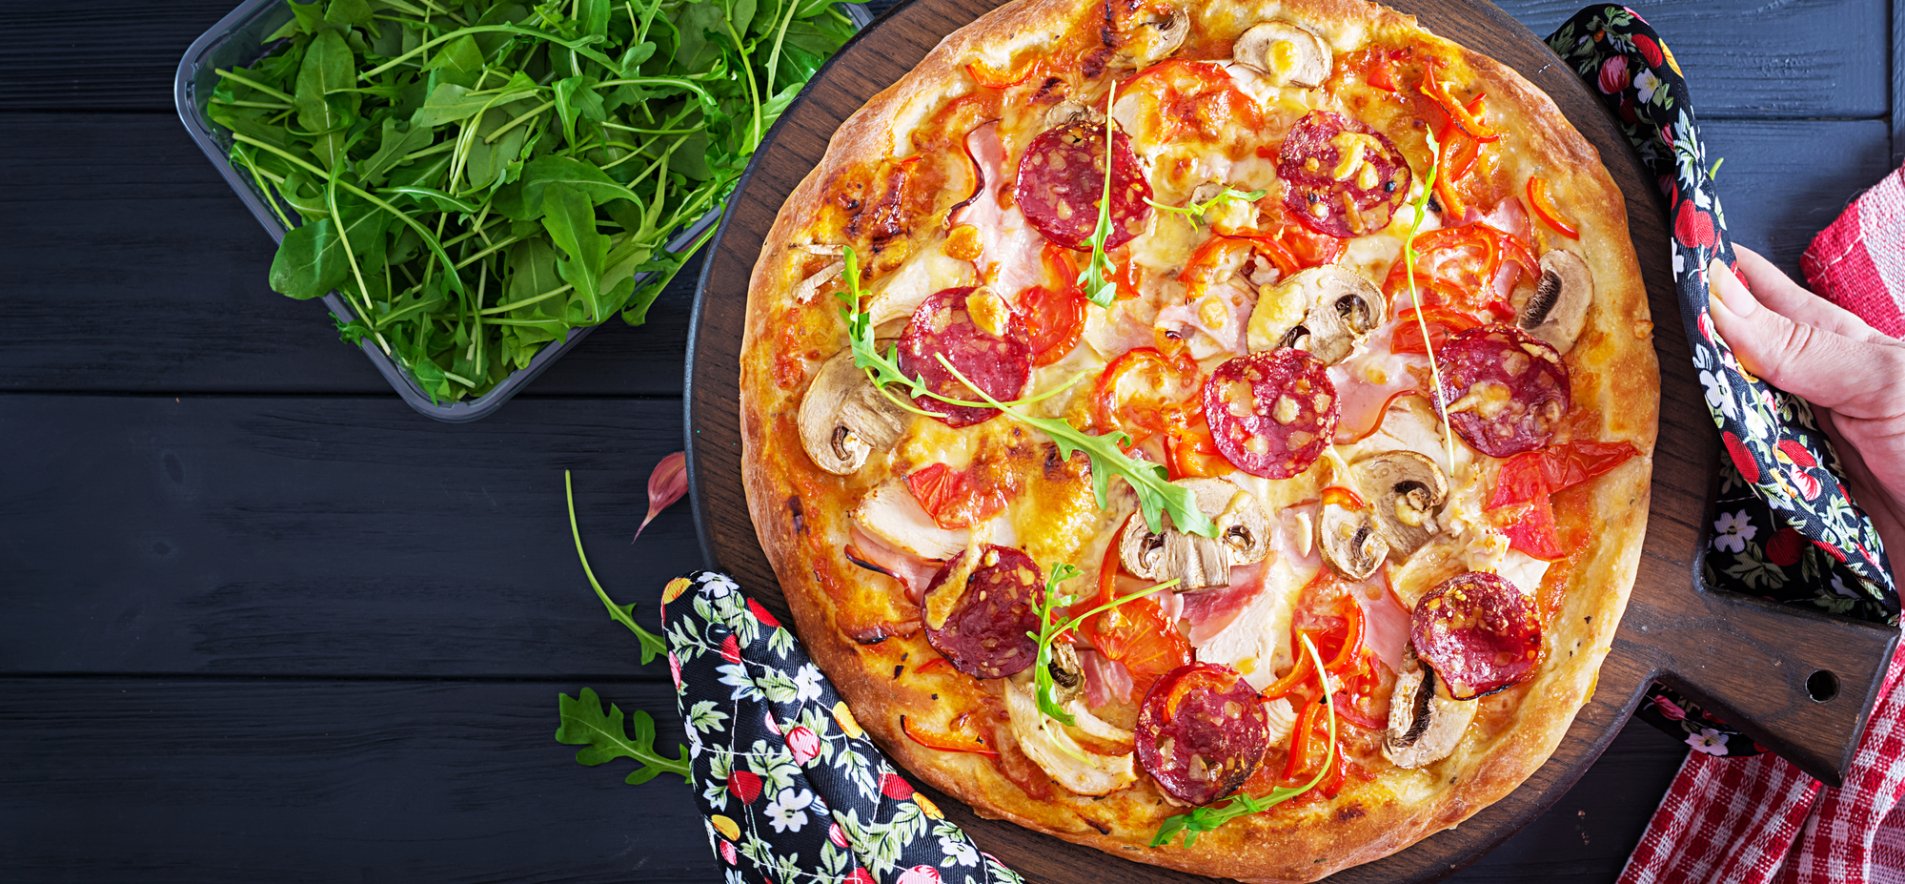 Пицца с опятами: рецепты приготовления с фото в домашних условиях